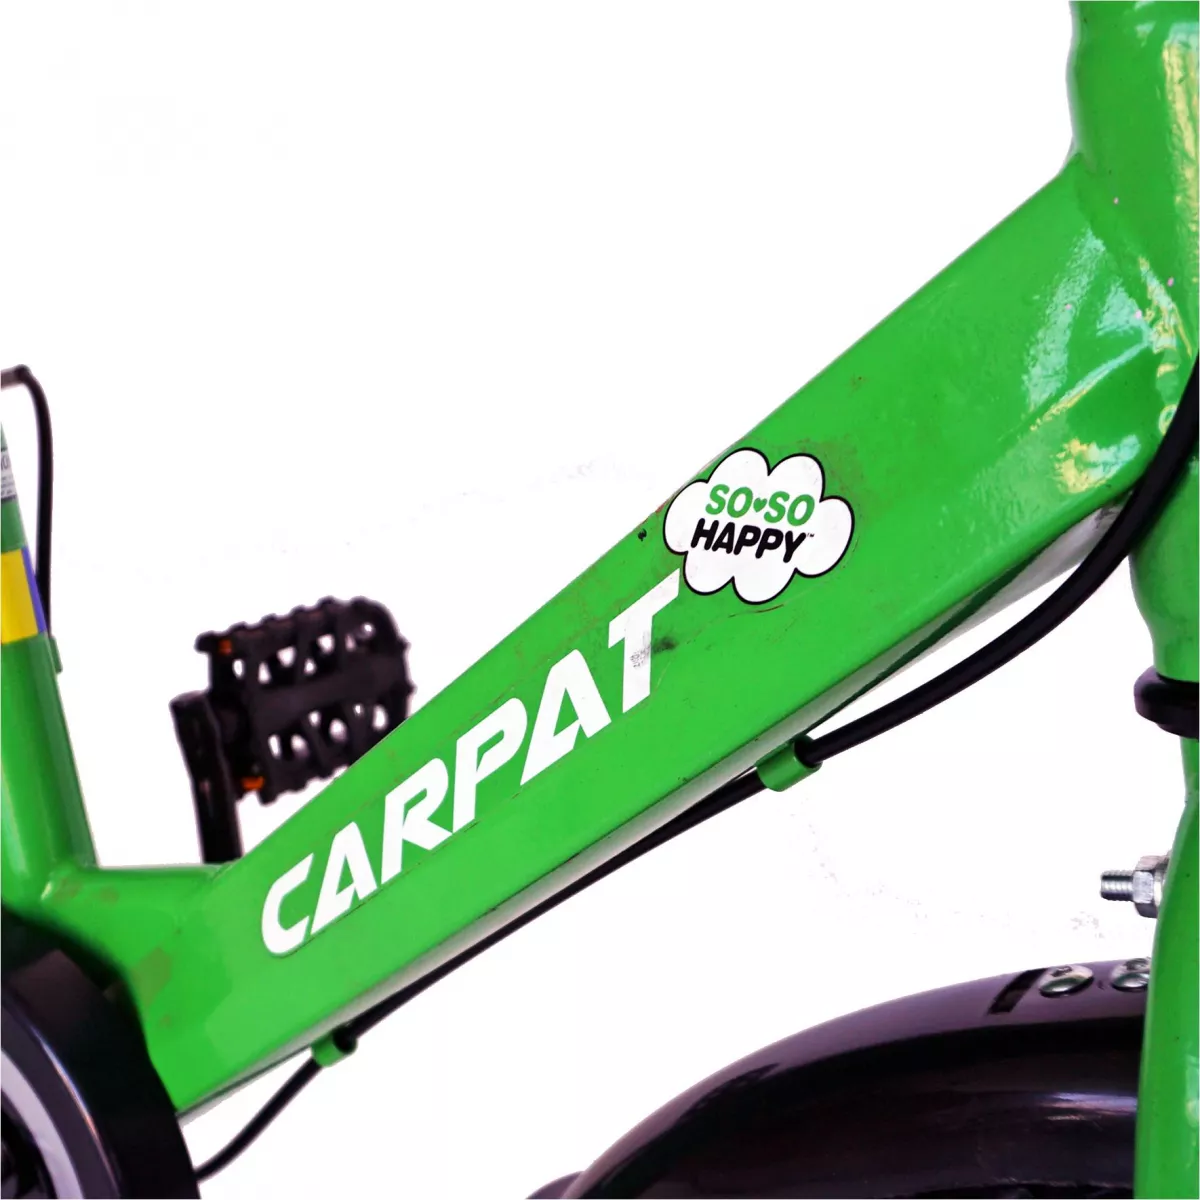 Bicicleta baieti CARPAT C1801C, roata 18", V-Brake, roti ajutatoare, 5-7 ani, verde/negru - RESIGILATA